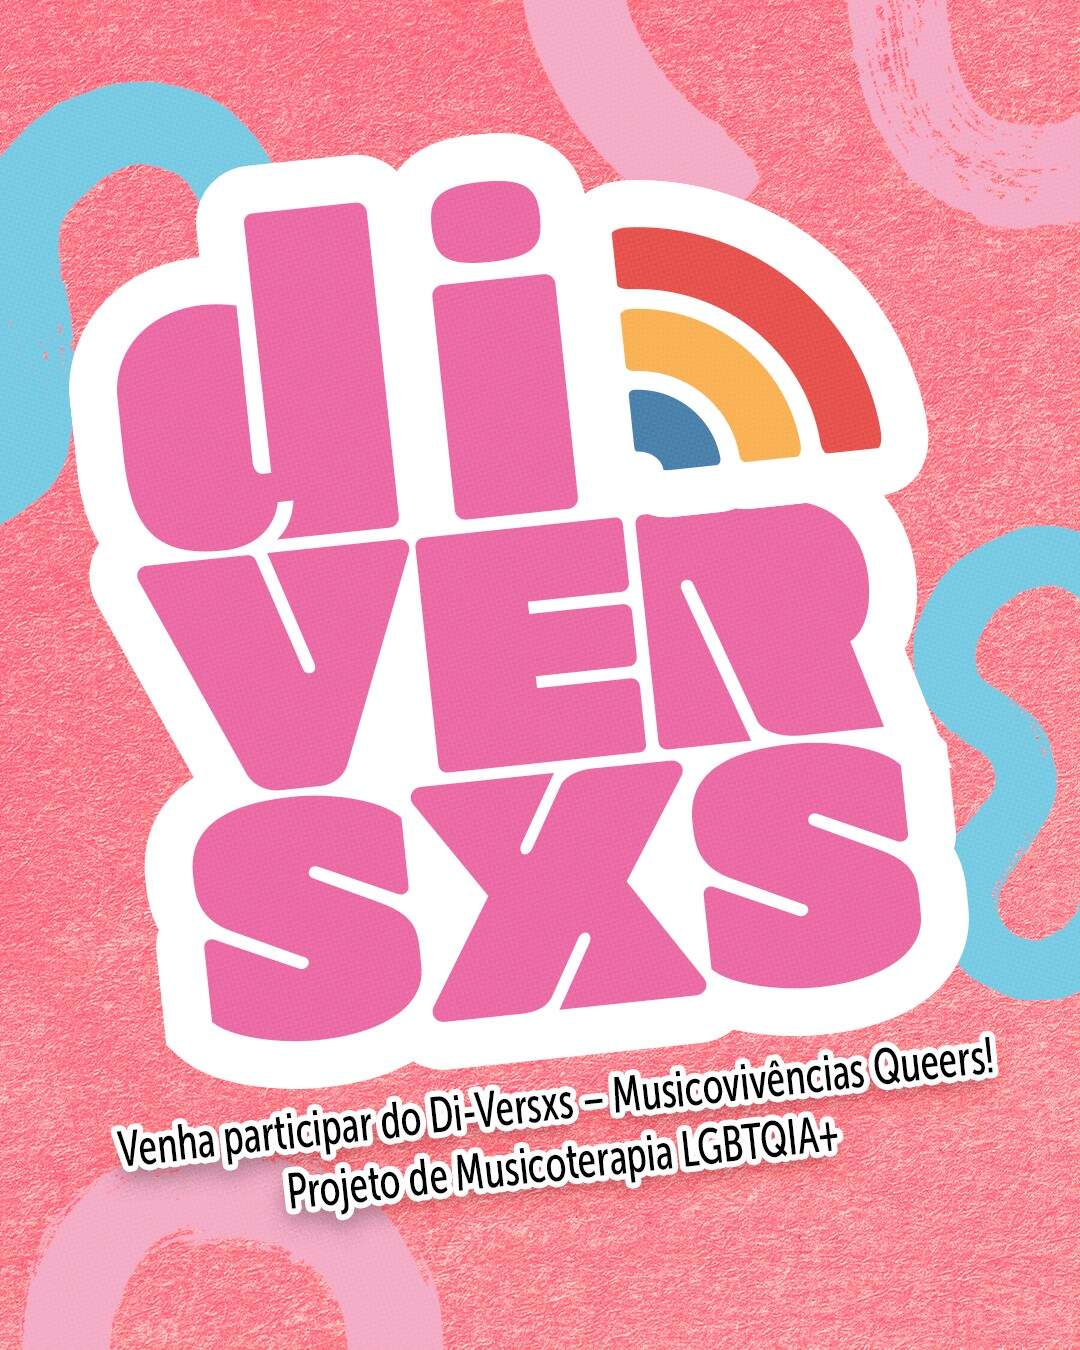 Di-Versxs - Musicovivências Queers!